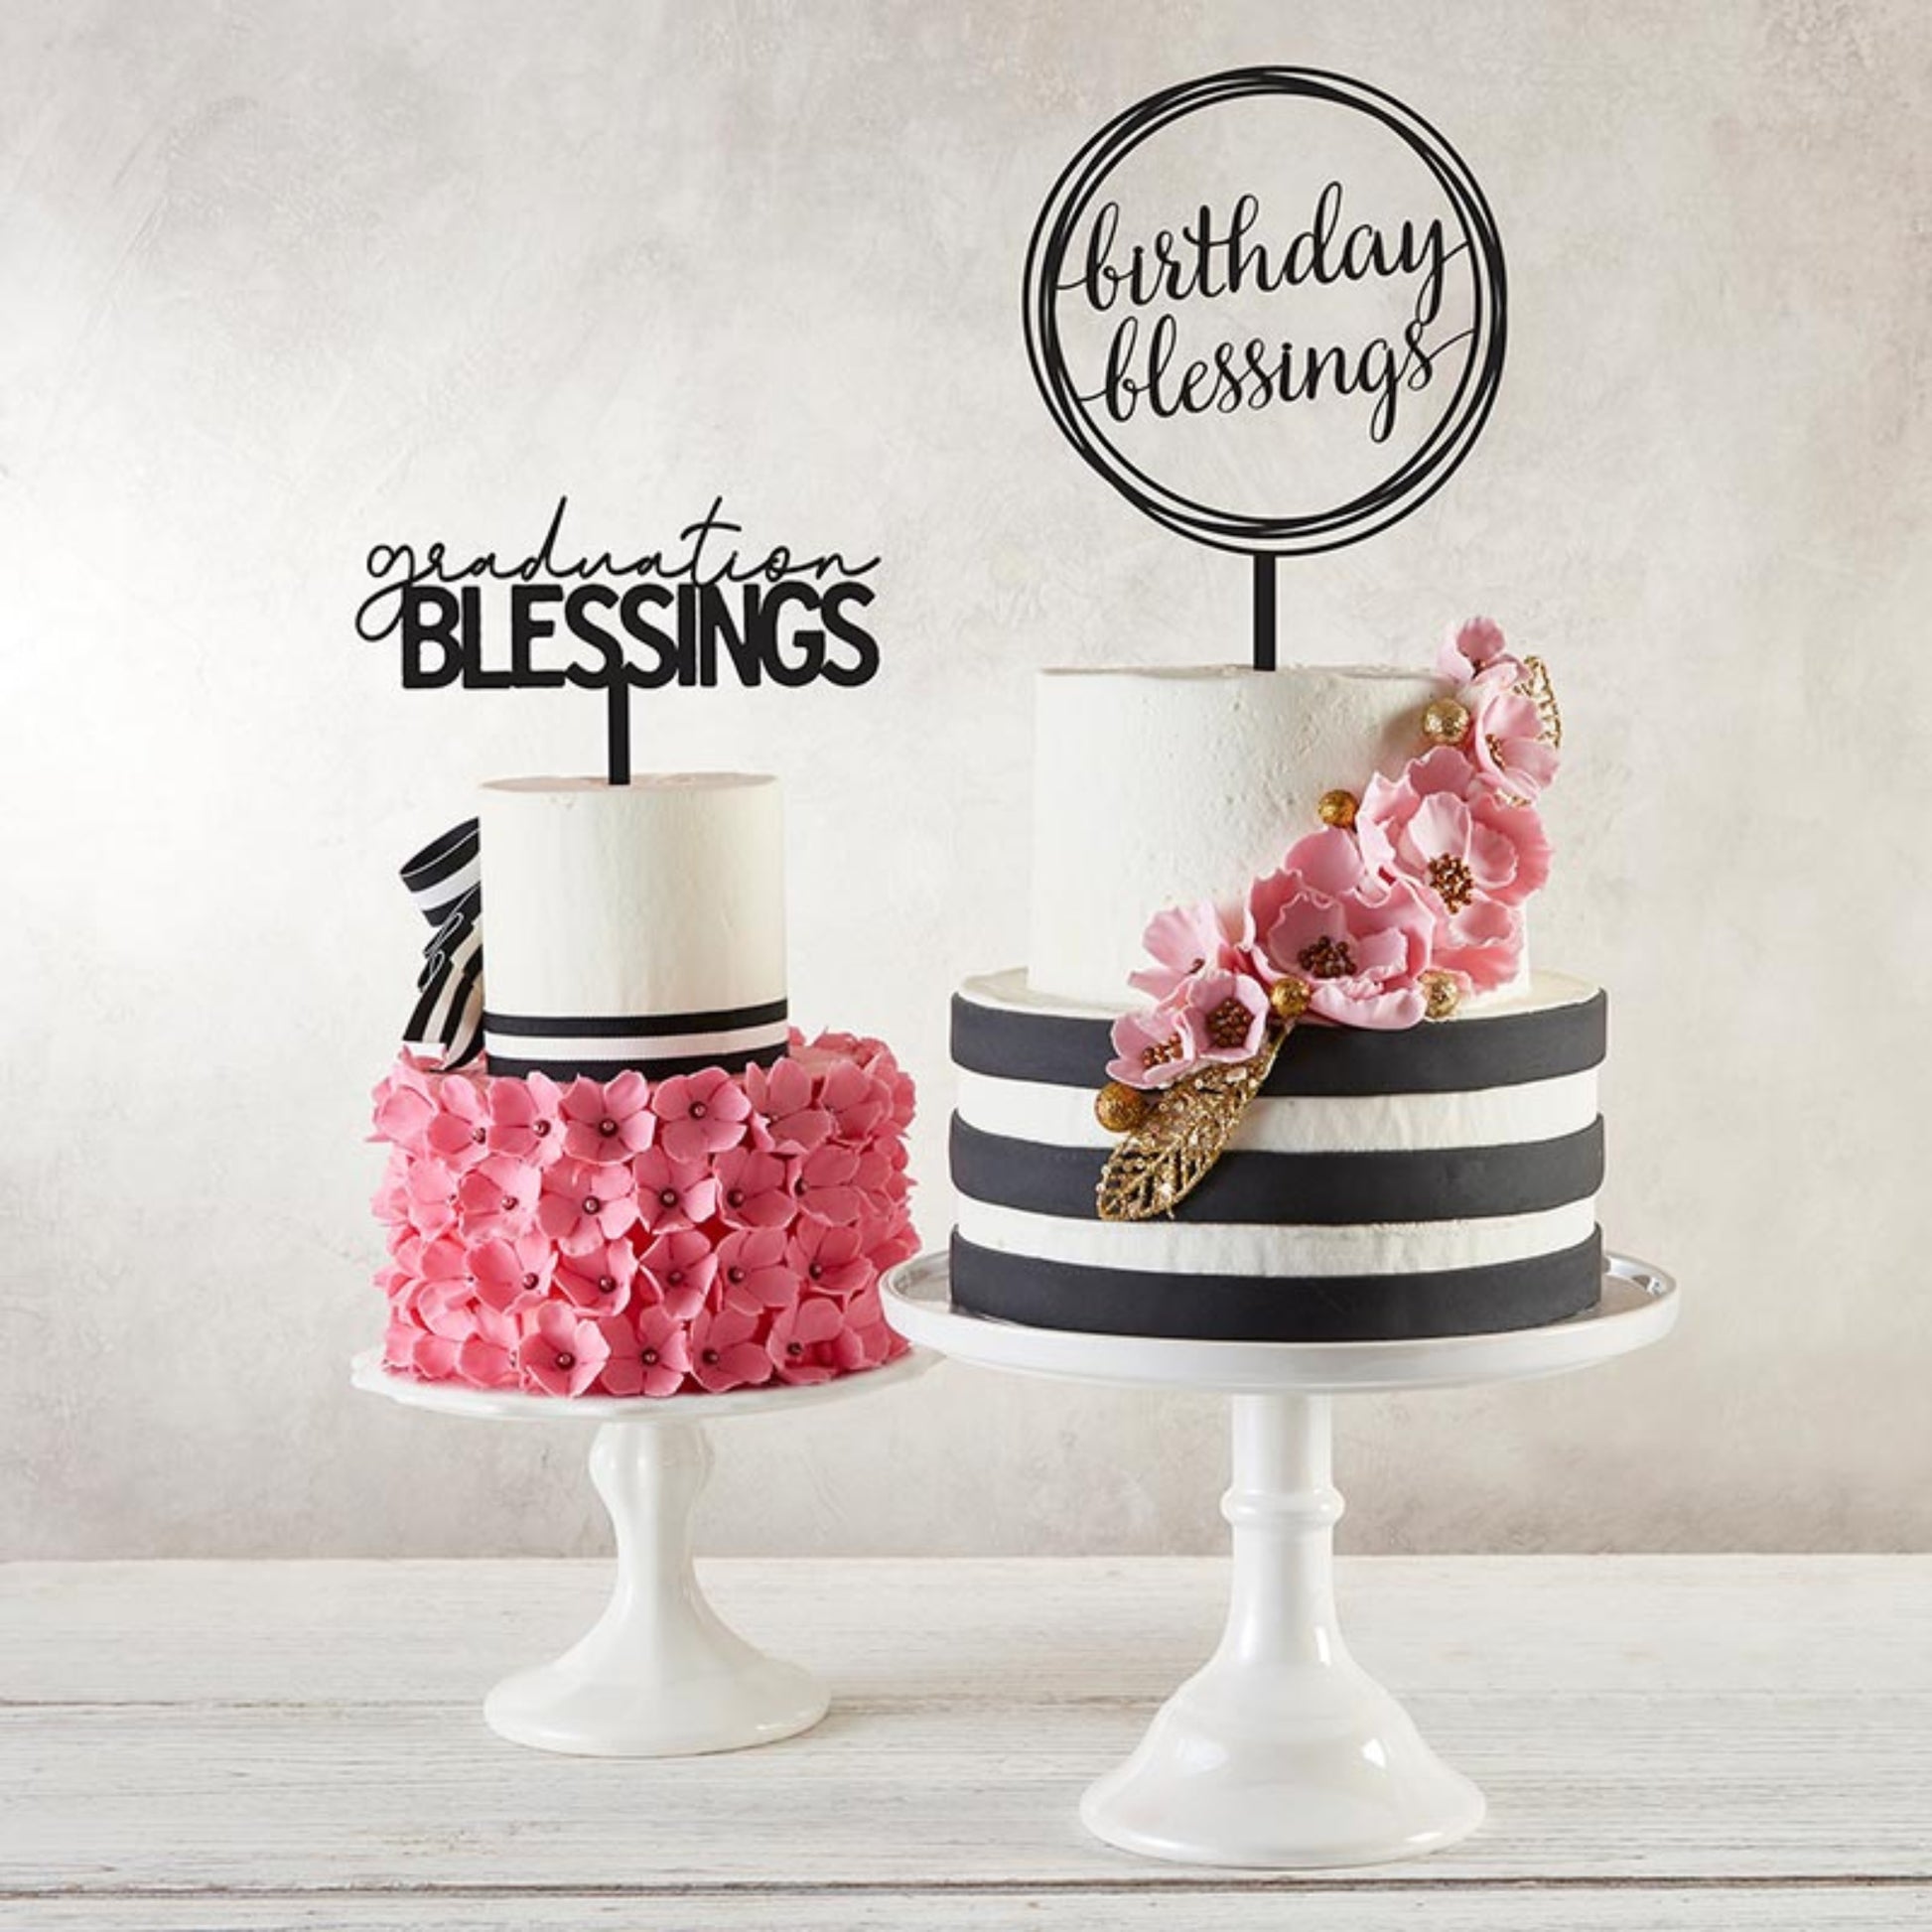 Acrylic Cake Topper - Graduation Blessings Cake Decoration | Shown with birthday blessings cake decoration | oak7west.com